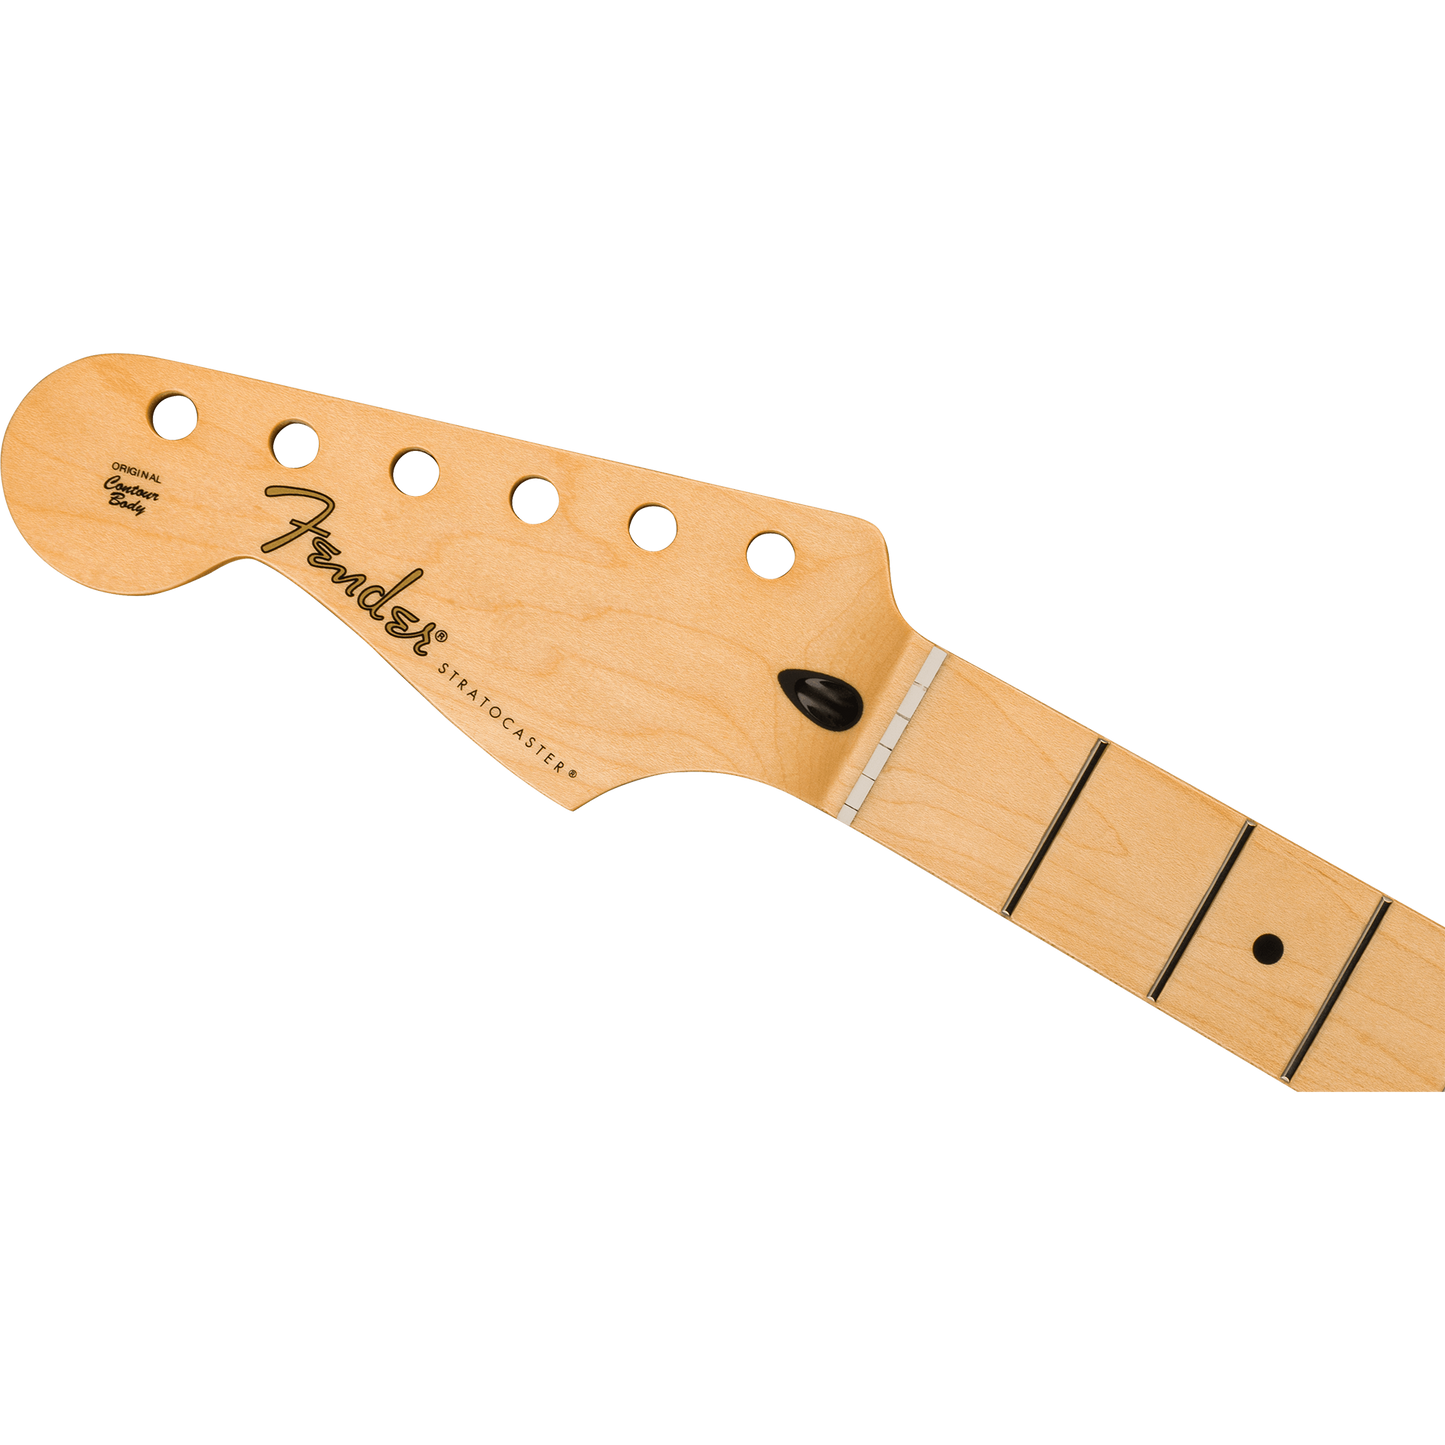 Fender Player Series Stratocaster Left Handed Neck